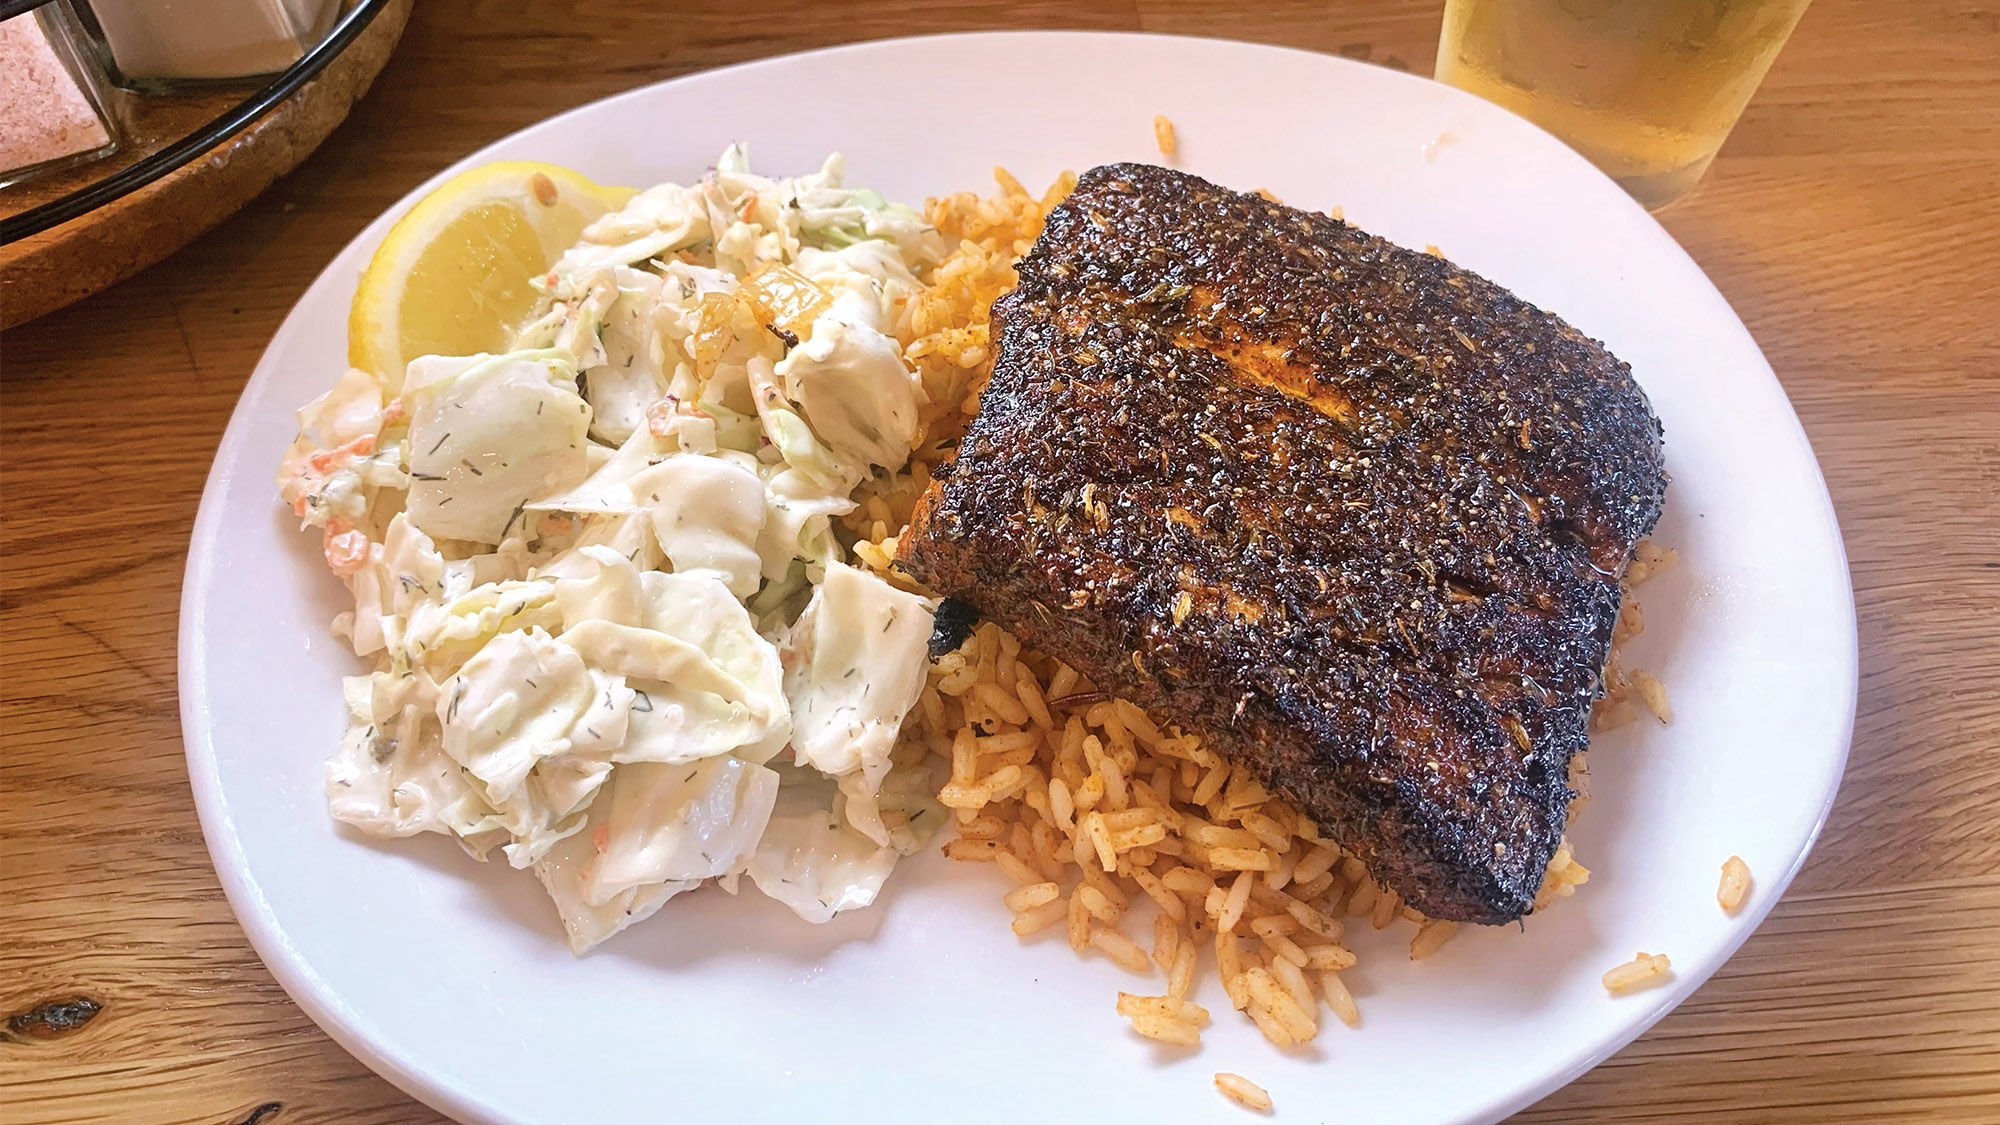 The fresh-catch plate at the Paia Fish Market, featuring blackened mahi mahi, Cajun rice and housemade coleslaw.